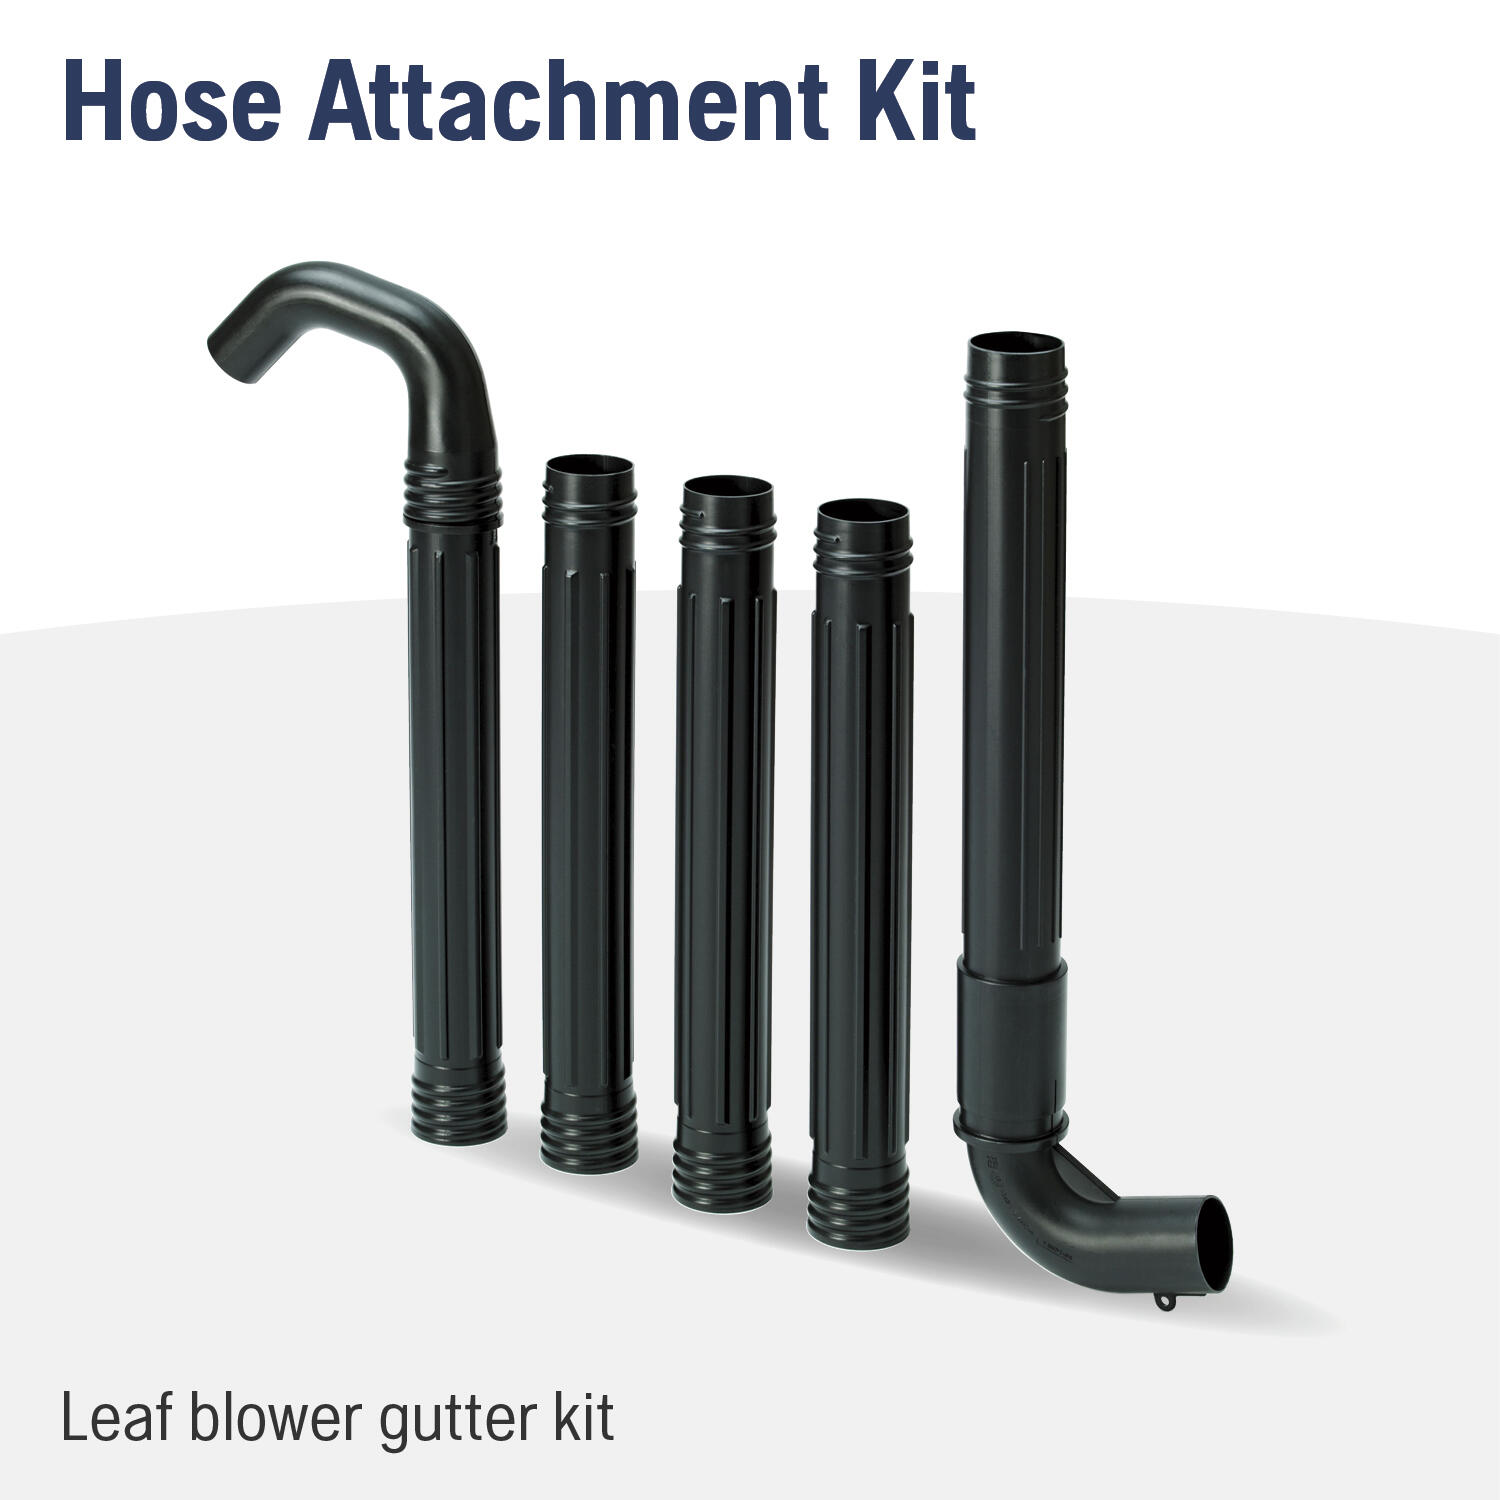 Husqvarna Hose Attachment Kit in the Leaf Blower Accessories